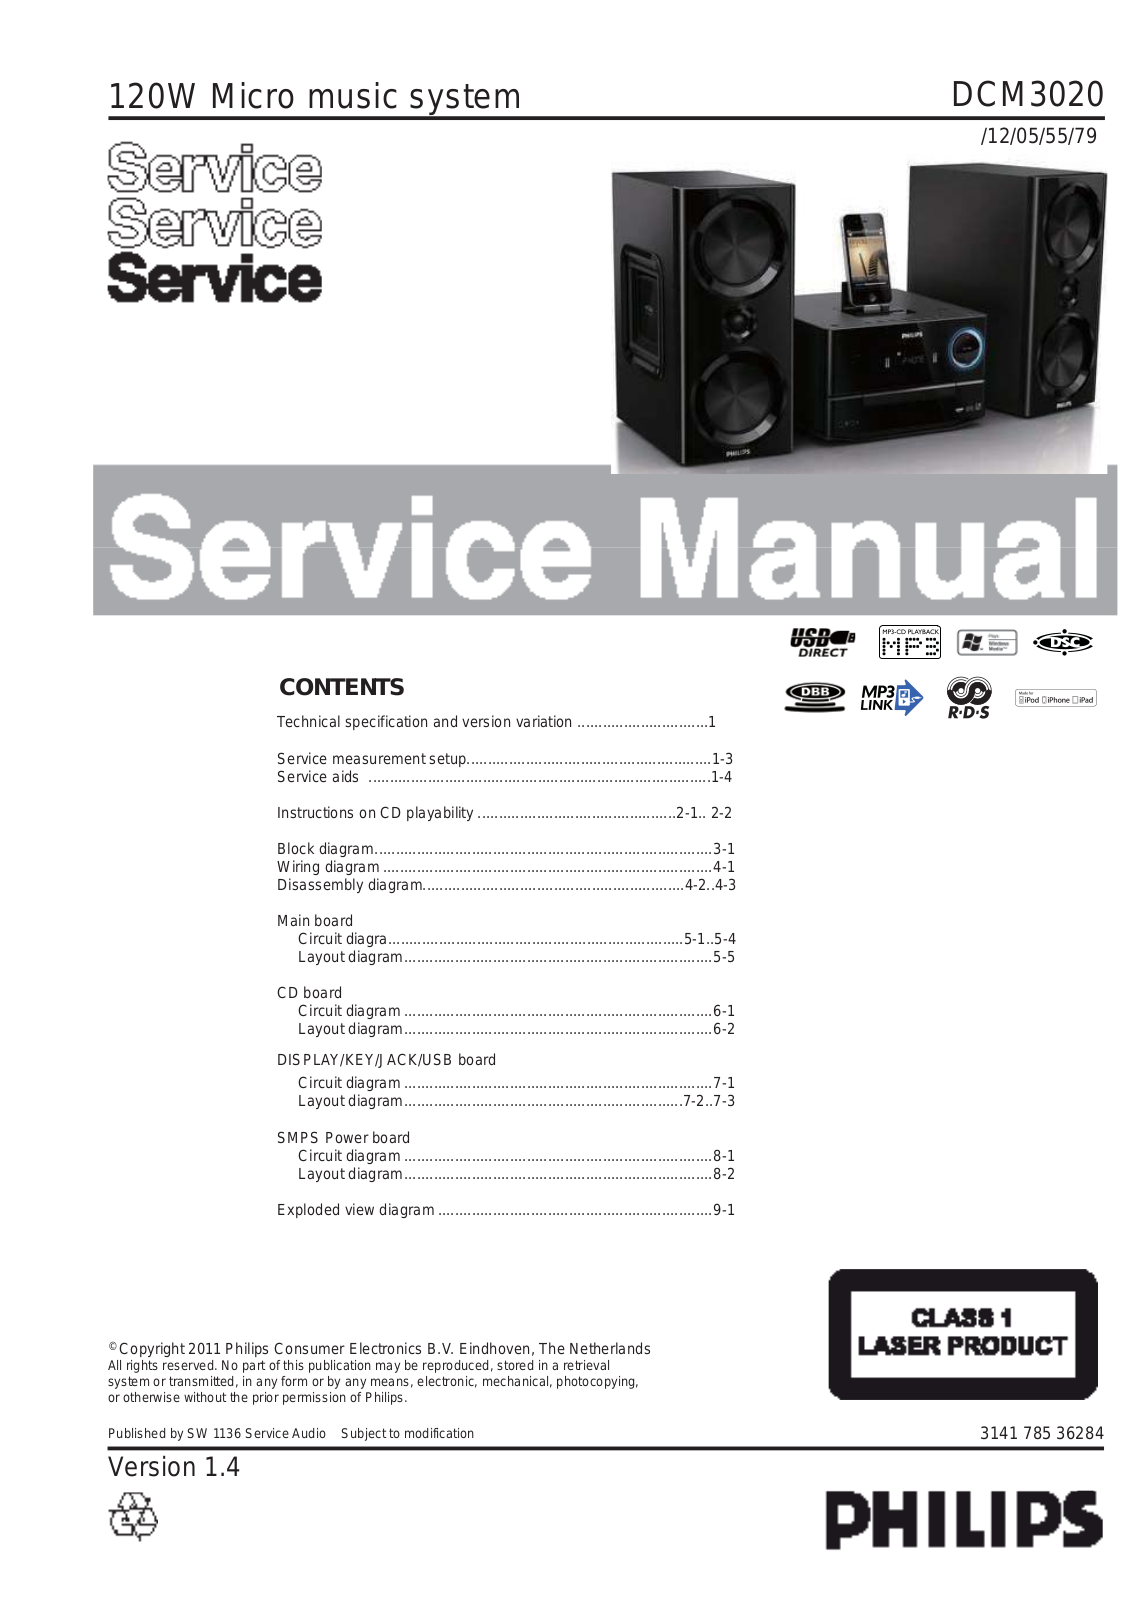 Philips DCM-3020 Service Manual